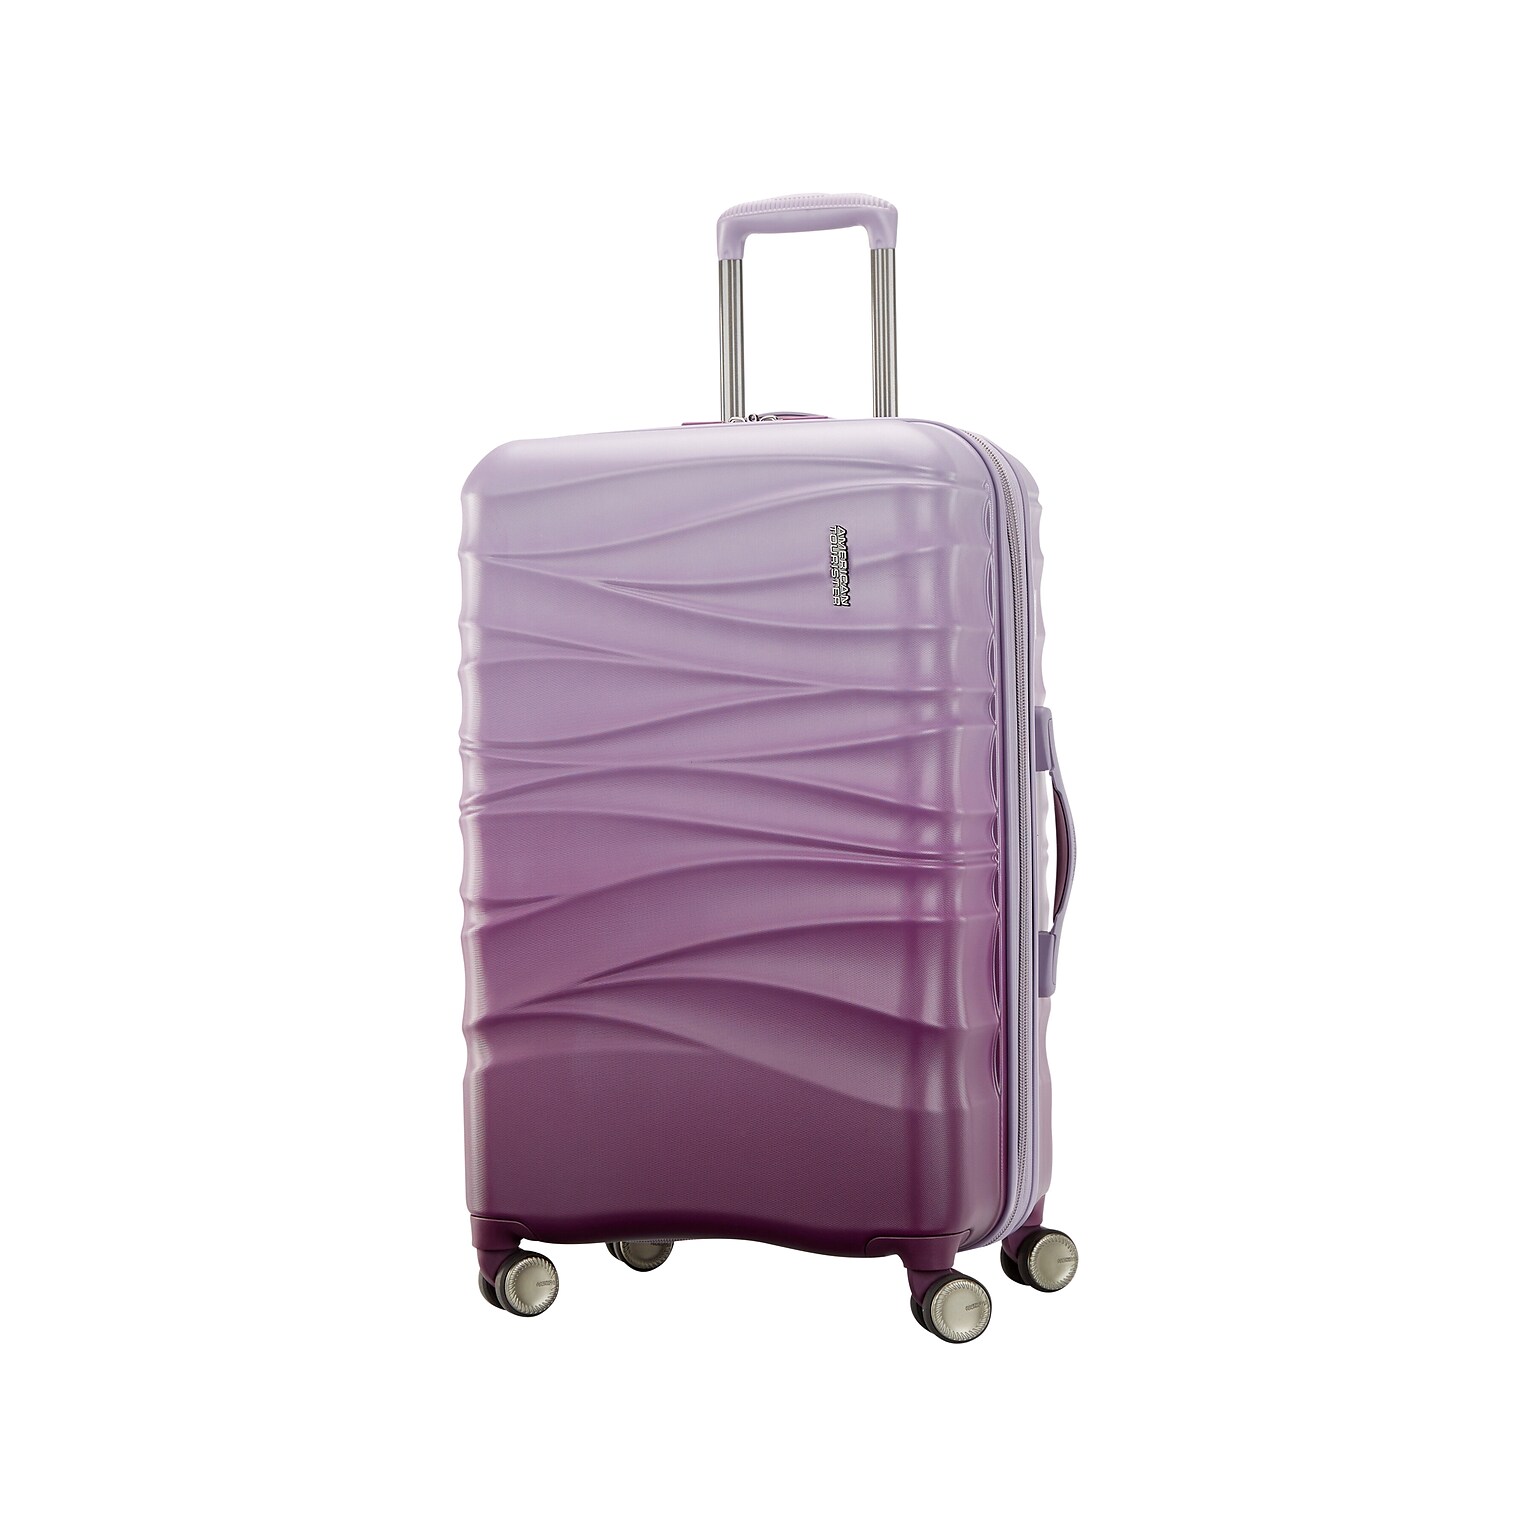 American Tourister Cascade 26.75 Hardside Suitcase, 4-Wheeled Spinner, Purple Haze (143245-4321)